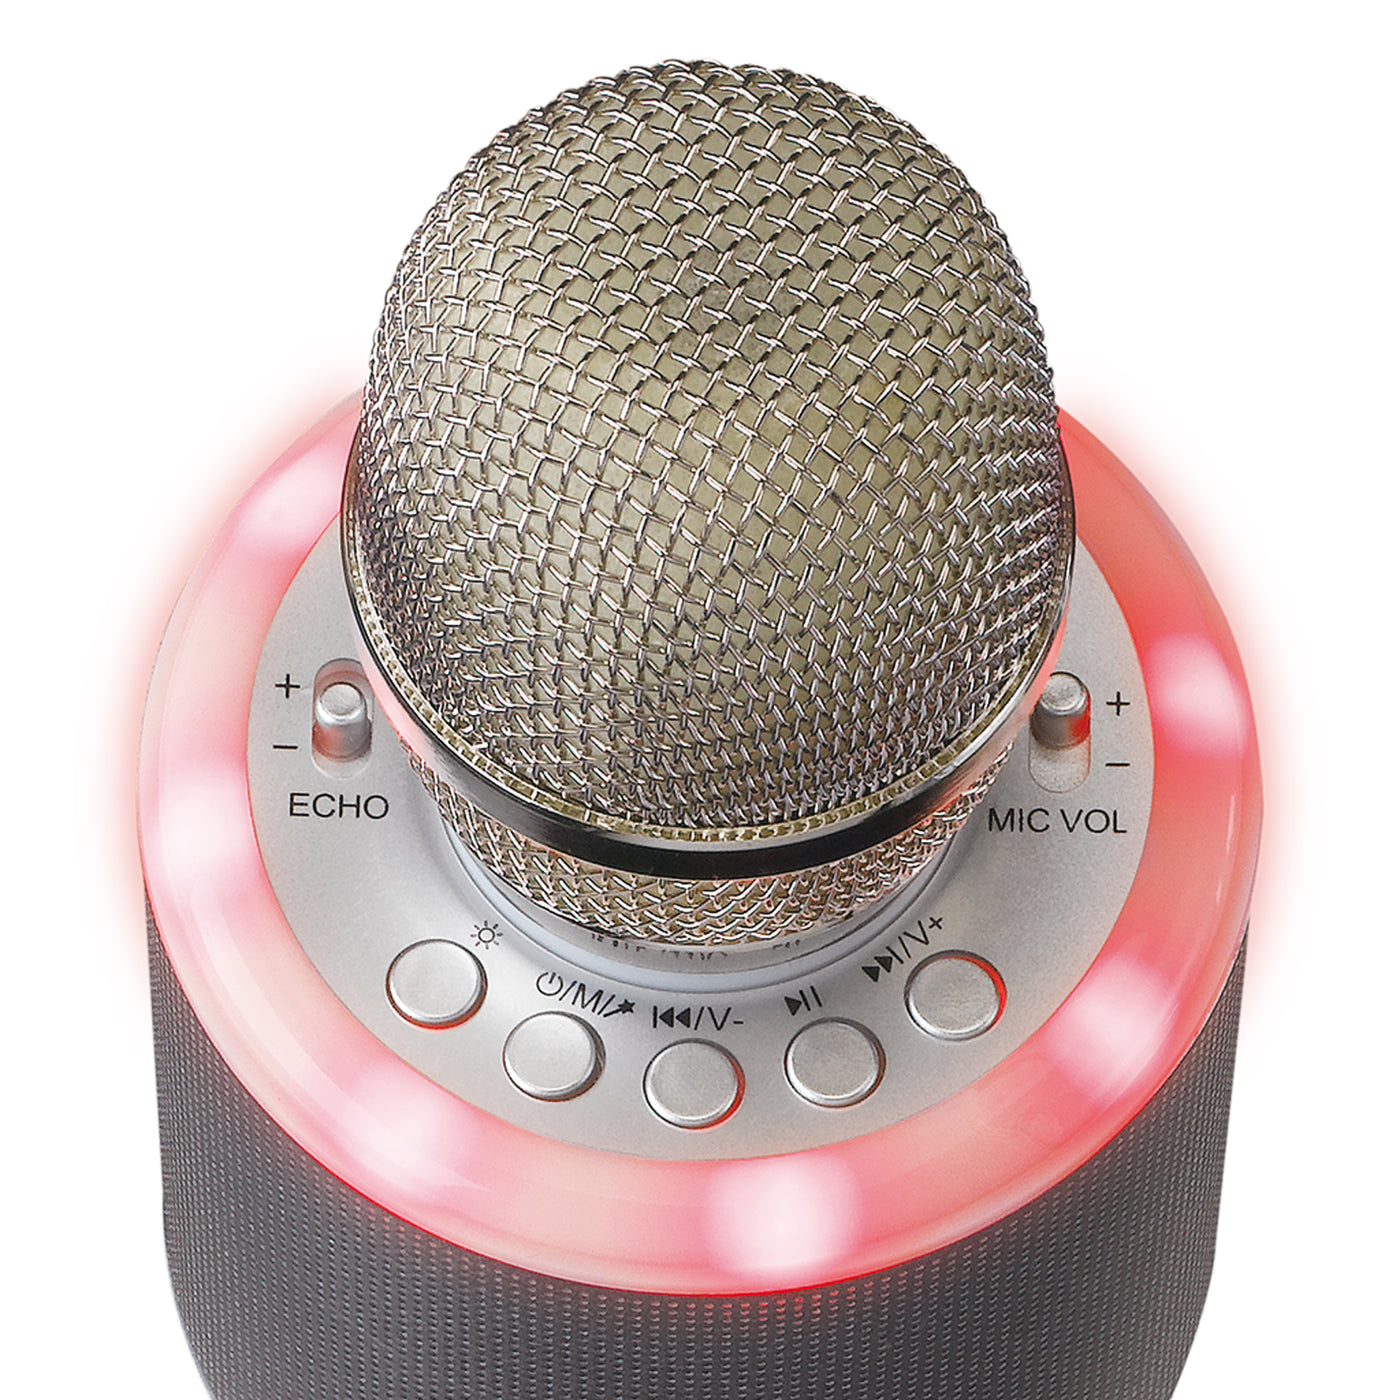 LENCO BMC-085SI - Karaoke microphone with Bluetooth®, speaker and lighting - silver